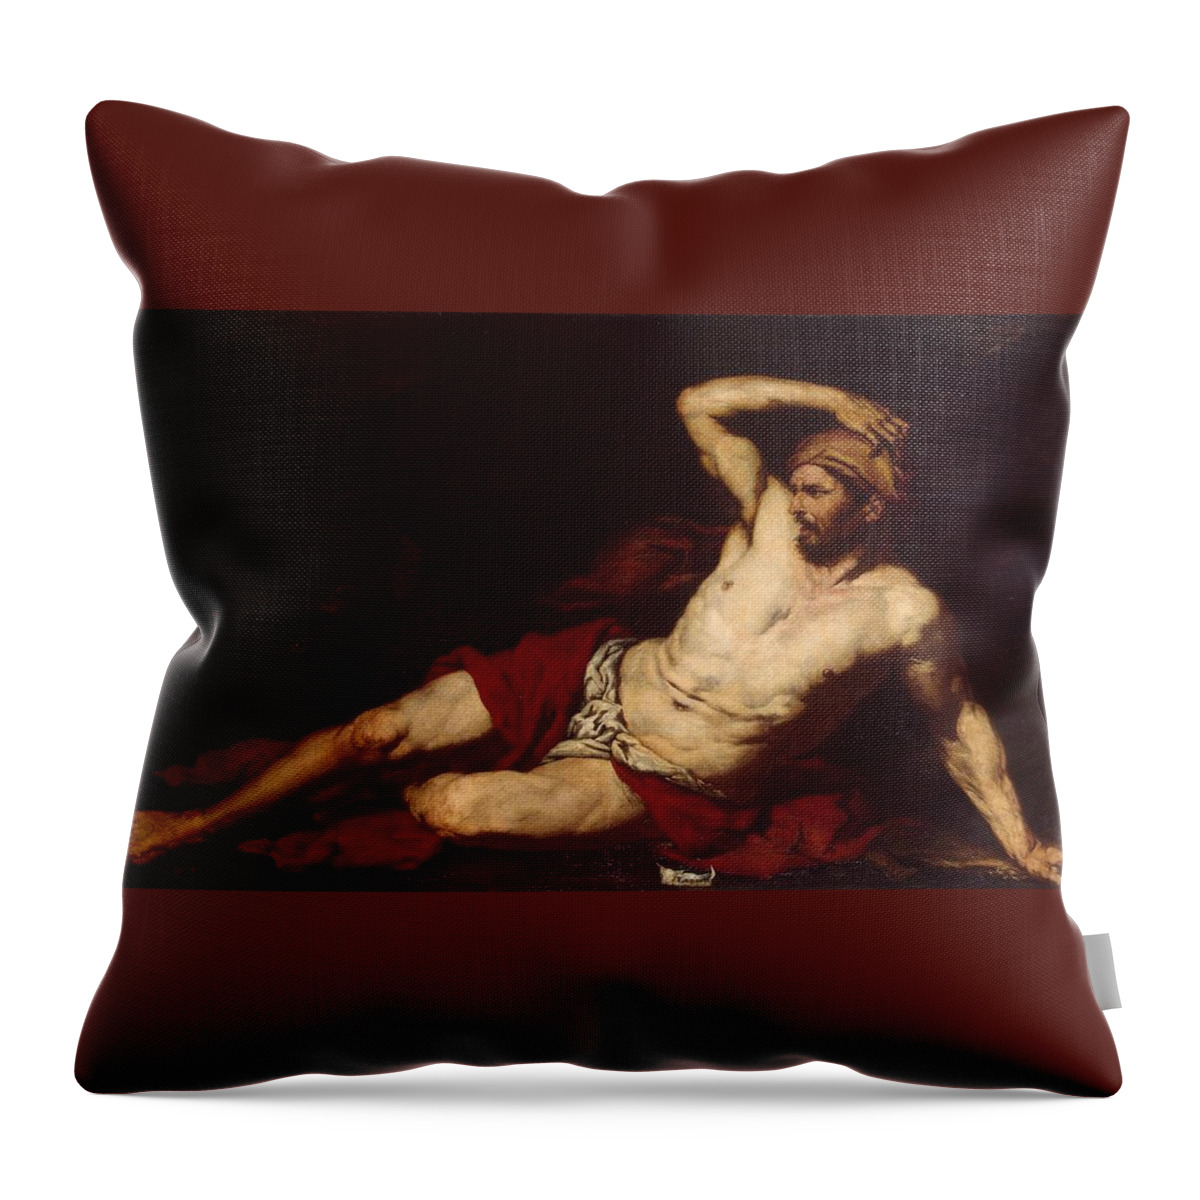 Samson Throw Pillow featuring the painting Samson by Giovan Battista Langetti